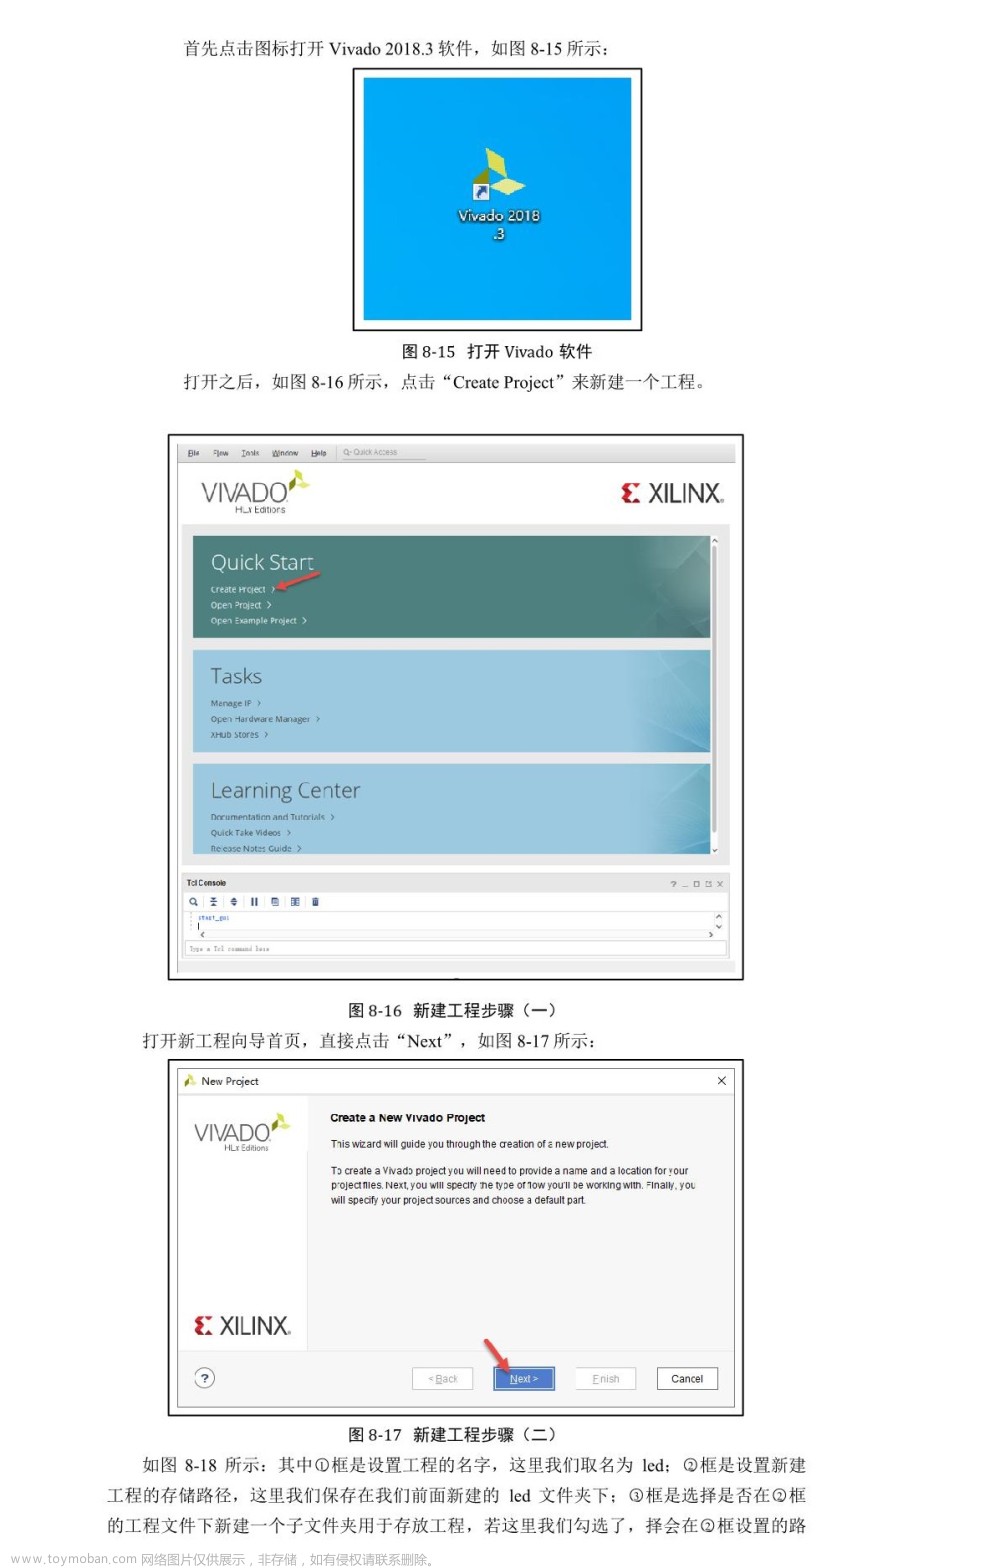 Vivado工程创建、仿真、下载与固化全流程